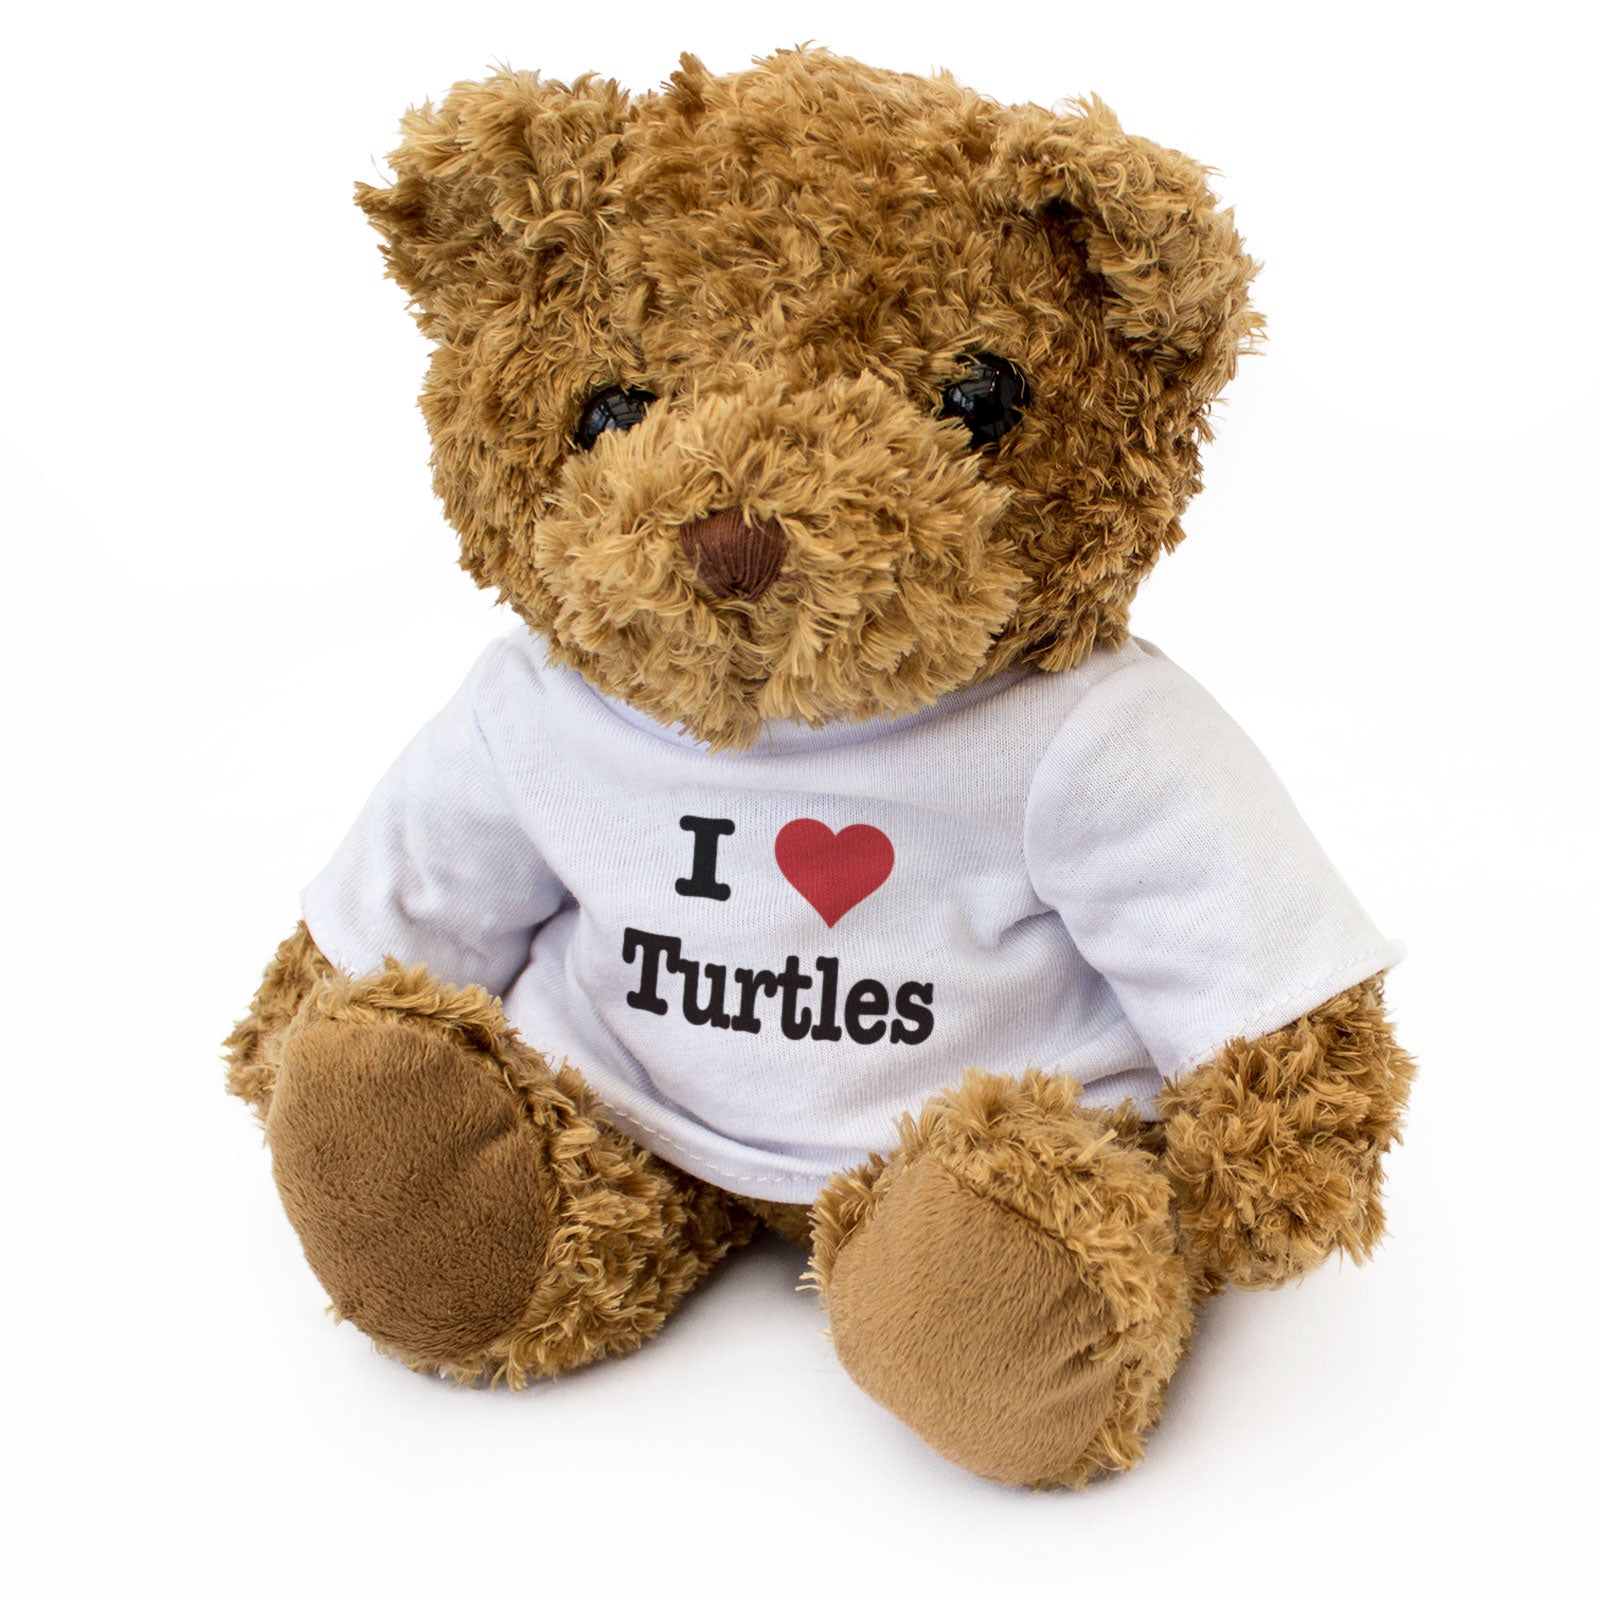 I Love Turtles - Teddy Bear